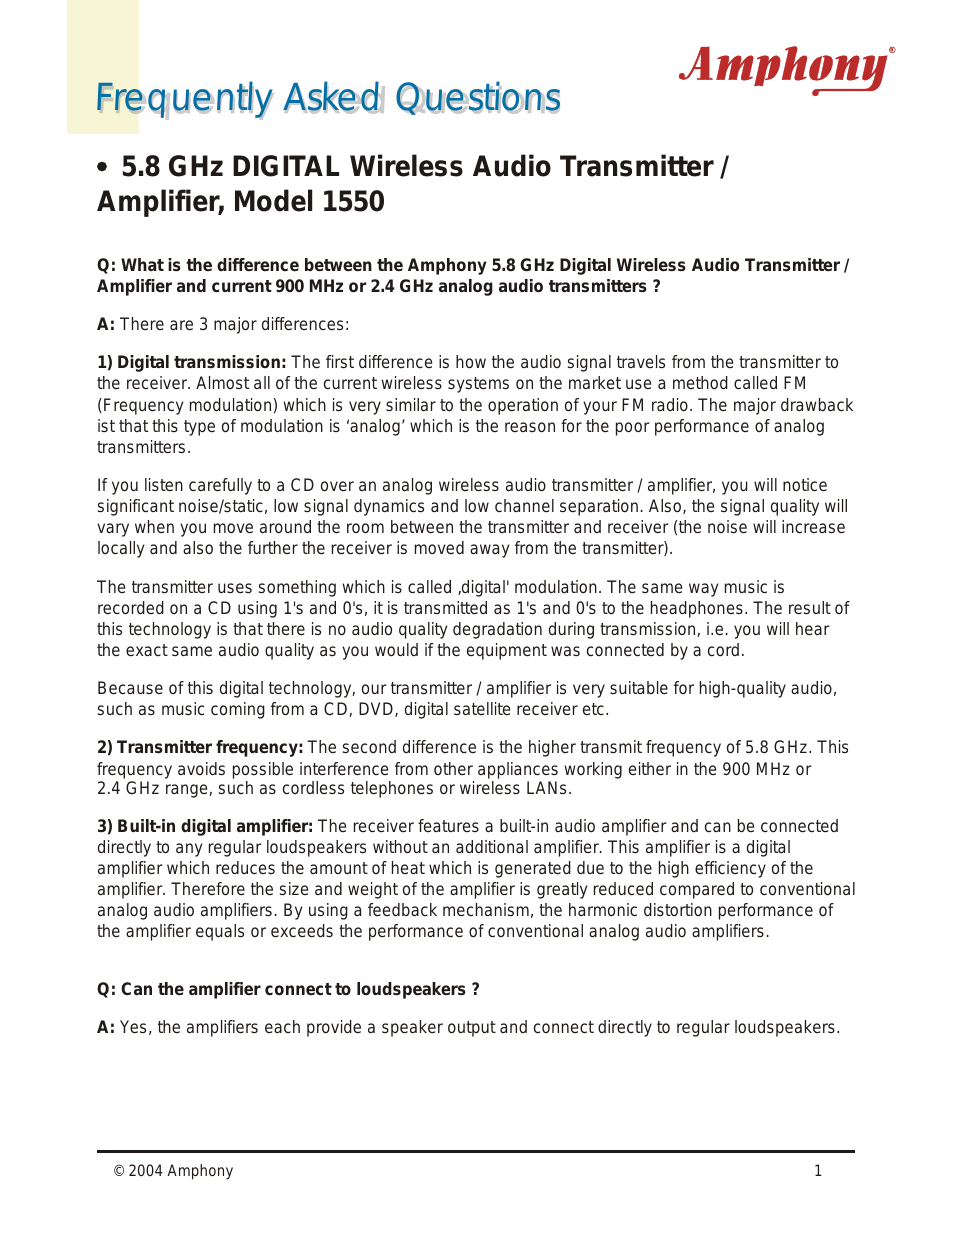 5.8 GHZ DIGITAL WIRELESS AUDIO TRANSMITTER / AMPLIFIER 1550